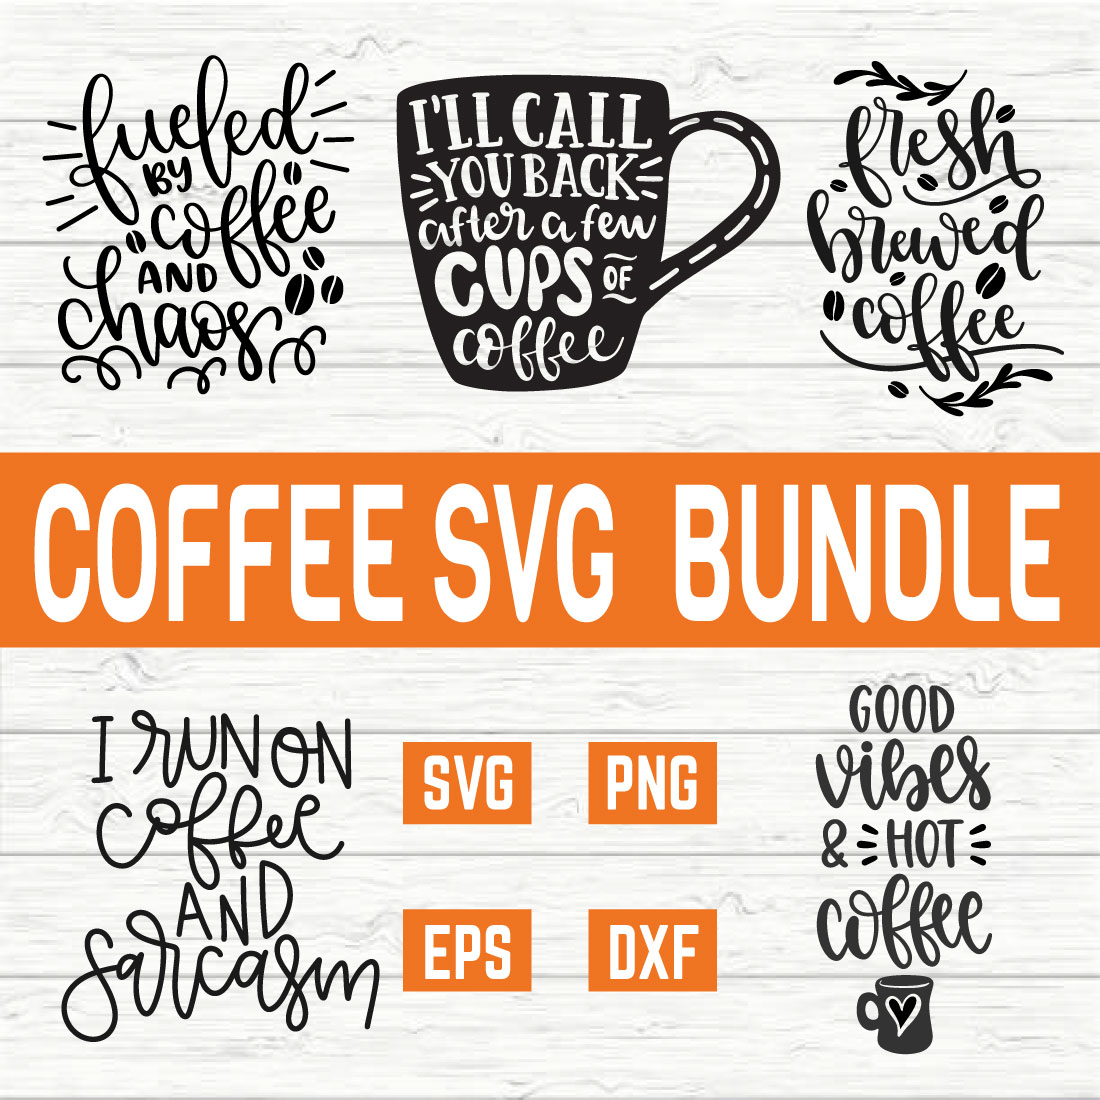 Coffee Svg Bundle vol2 preview image.